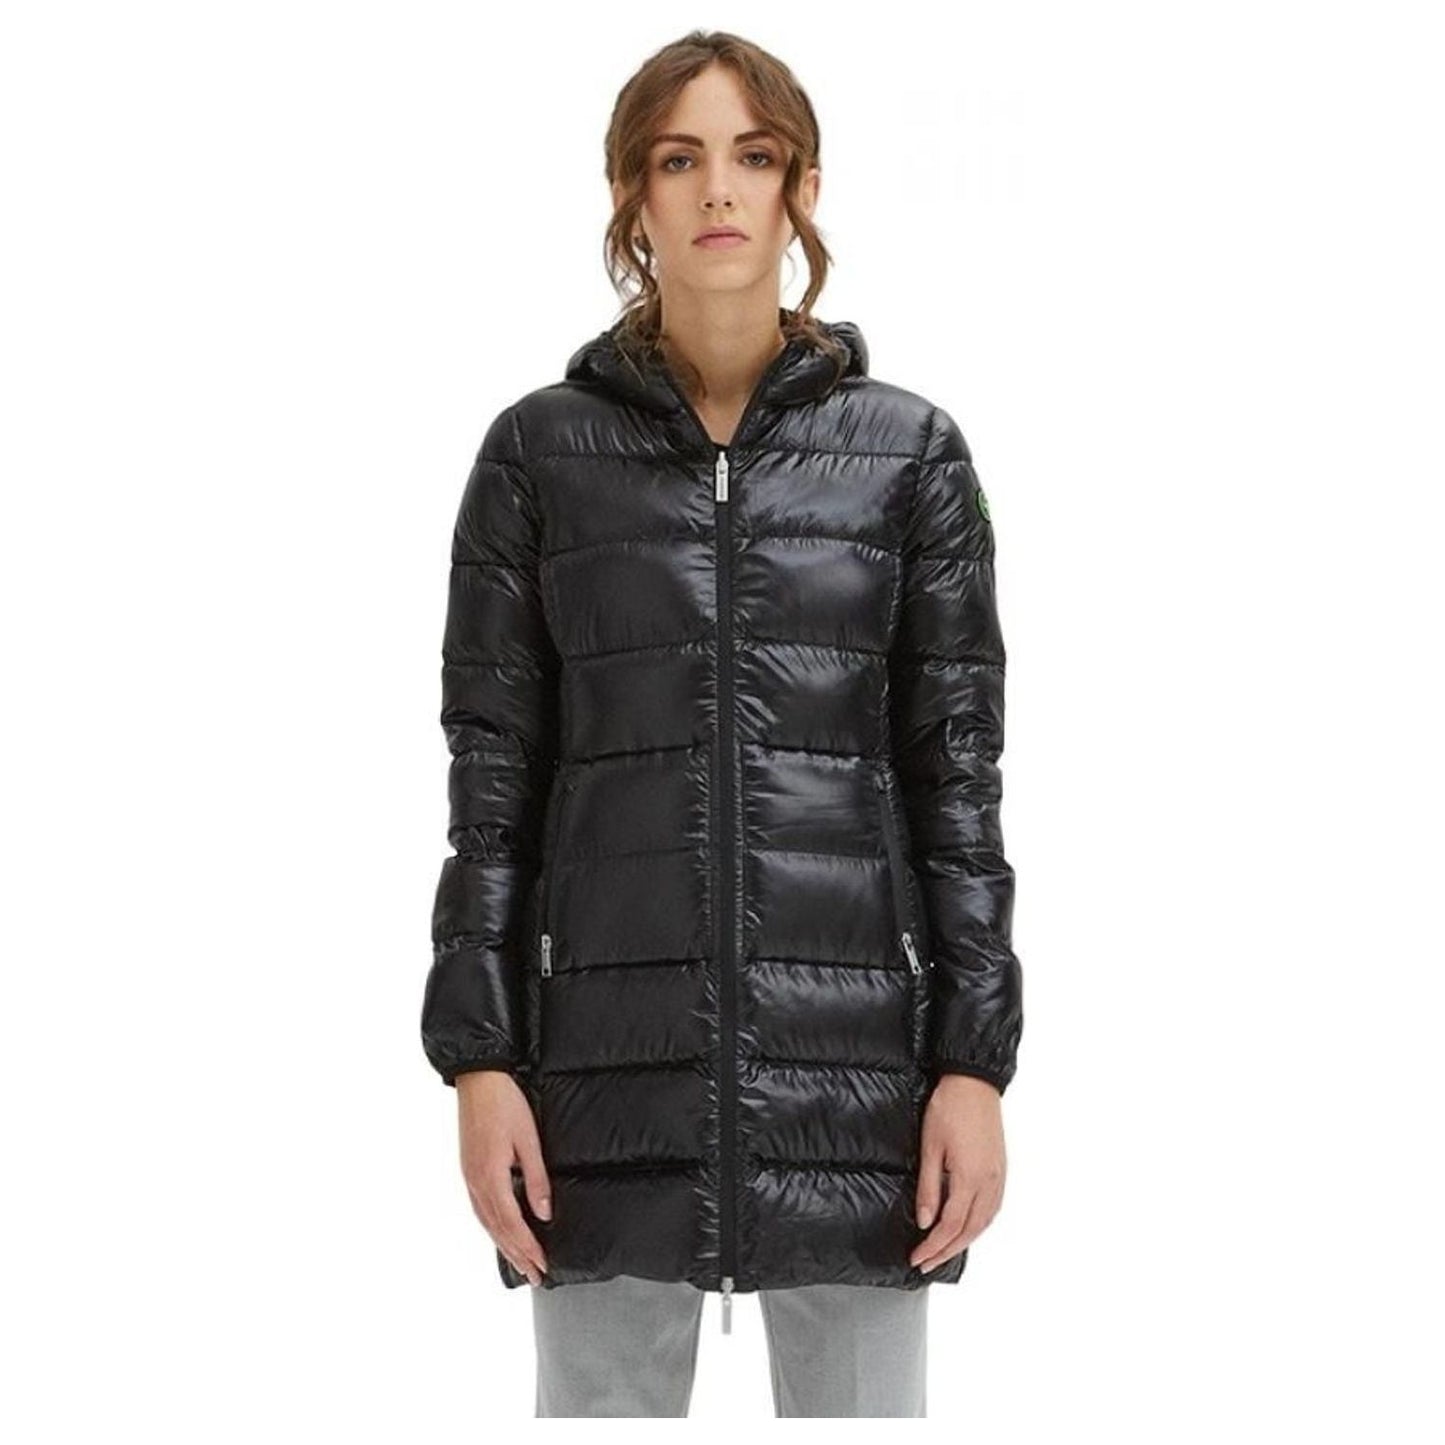 Centogrammi Sleek Nylon Down Jacket with Hood black-nylon-jackets-coat-3 product-8588-940352940-58ec59fd-222.jpg